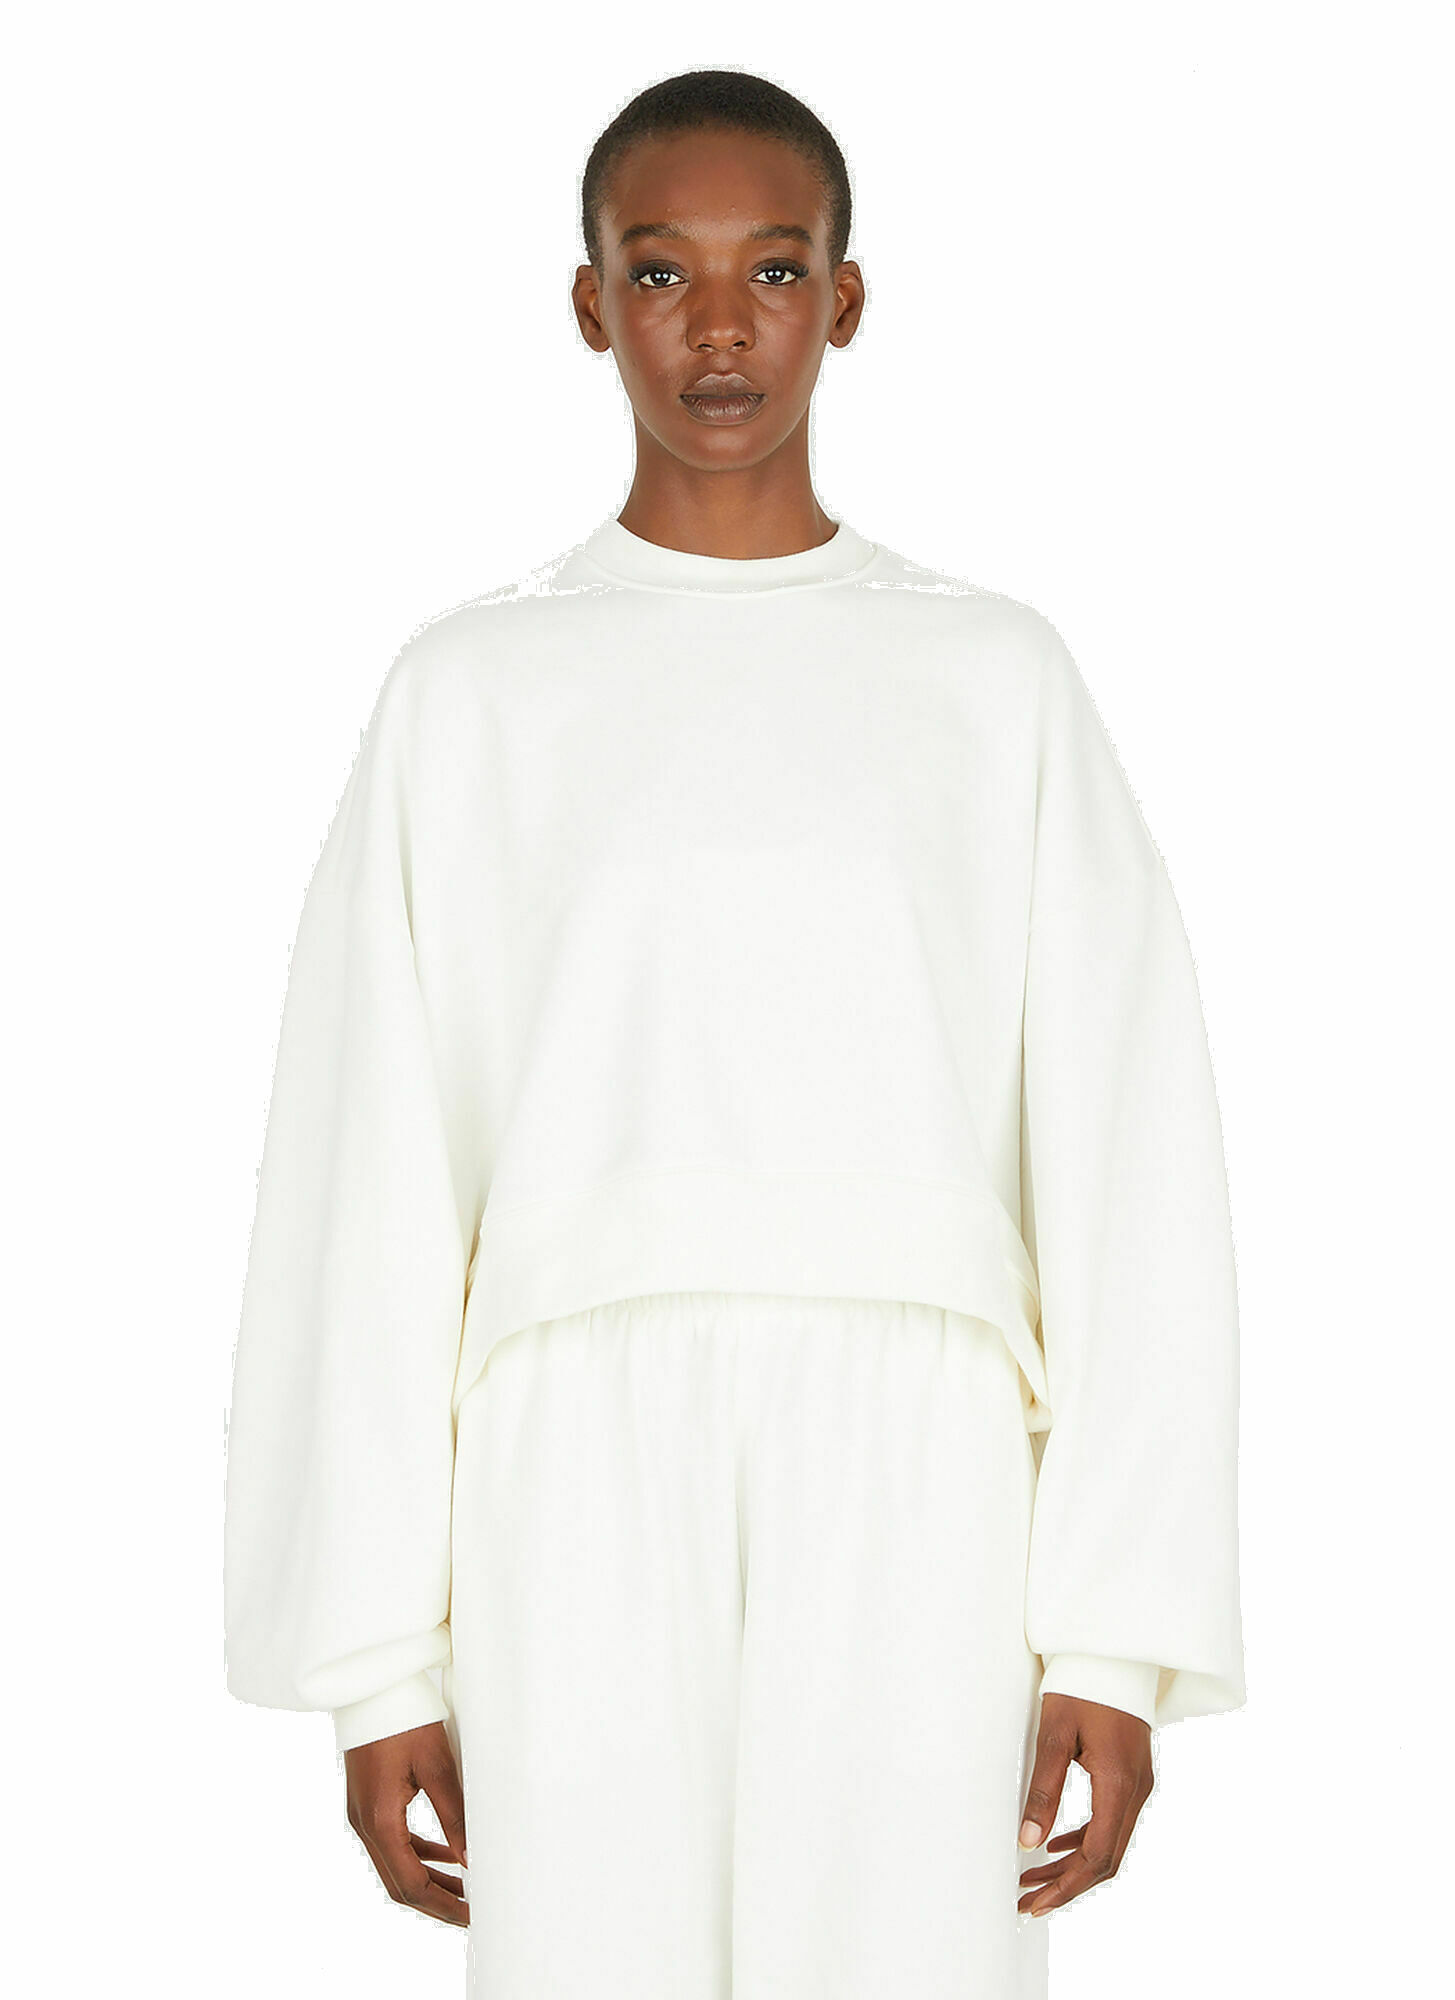 WARDROBE.NYC x Hailey Bieber - Oversized Sweatshirt in White